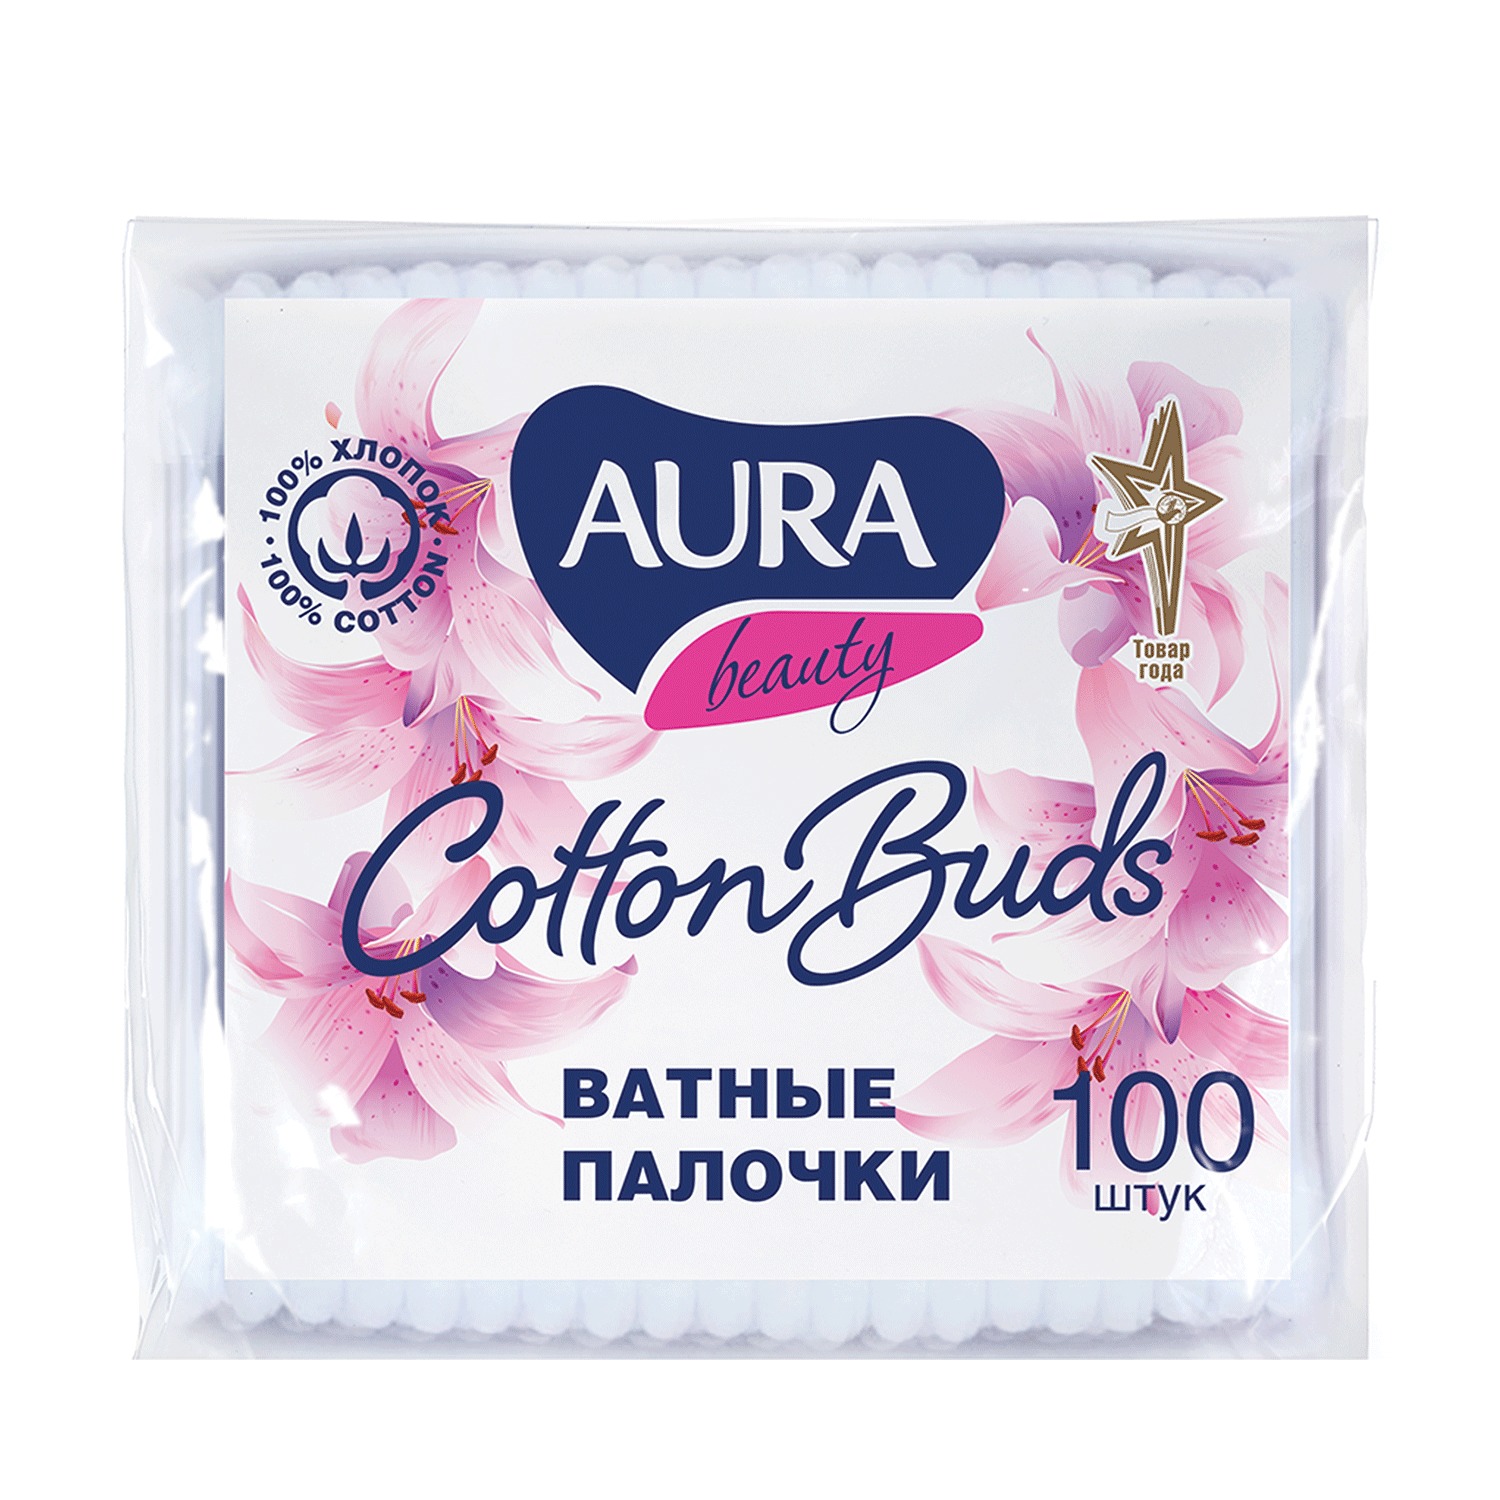 

Aura Ватные палочки 100 шт. п/э упаковка